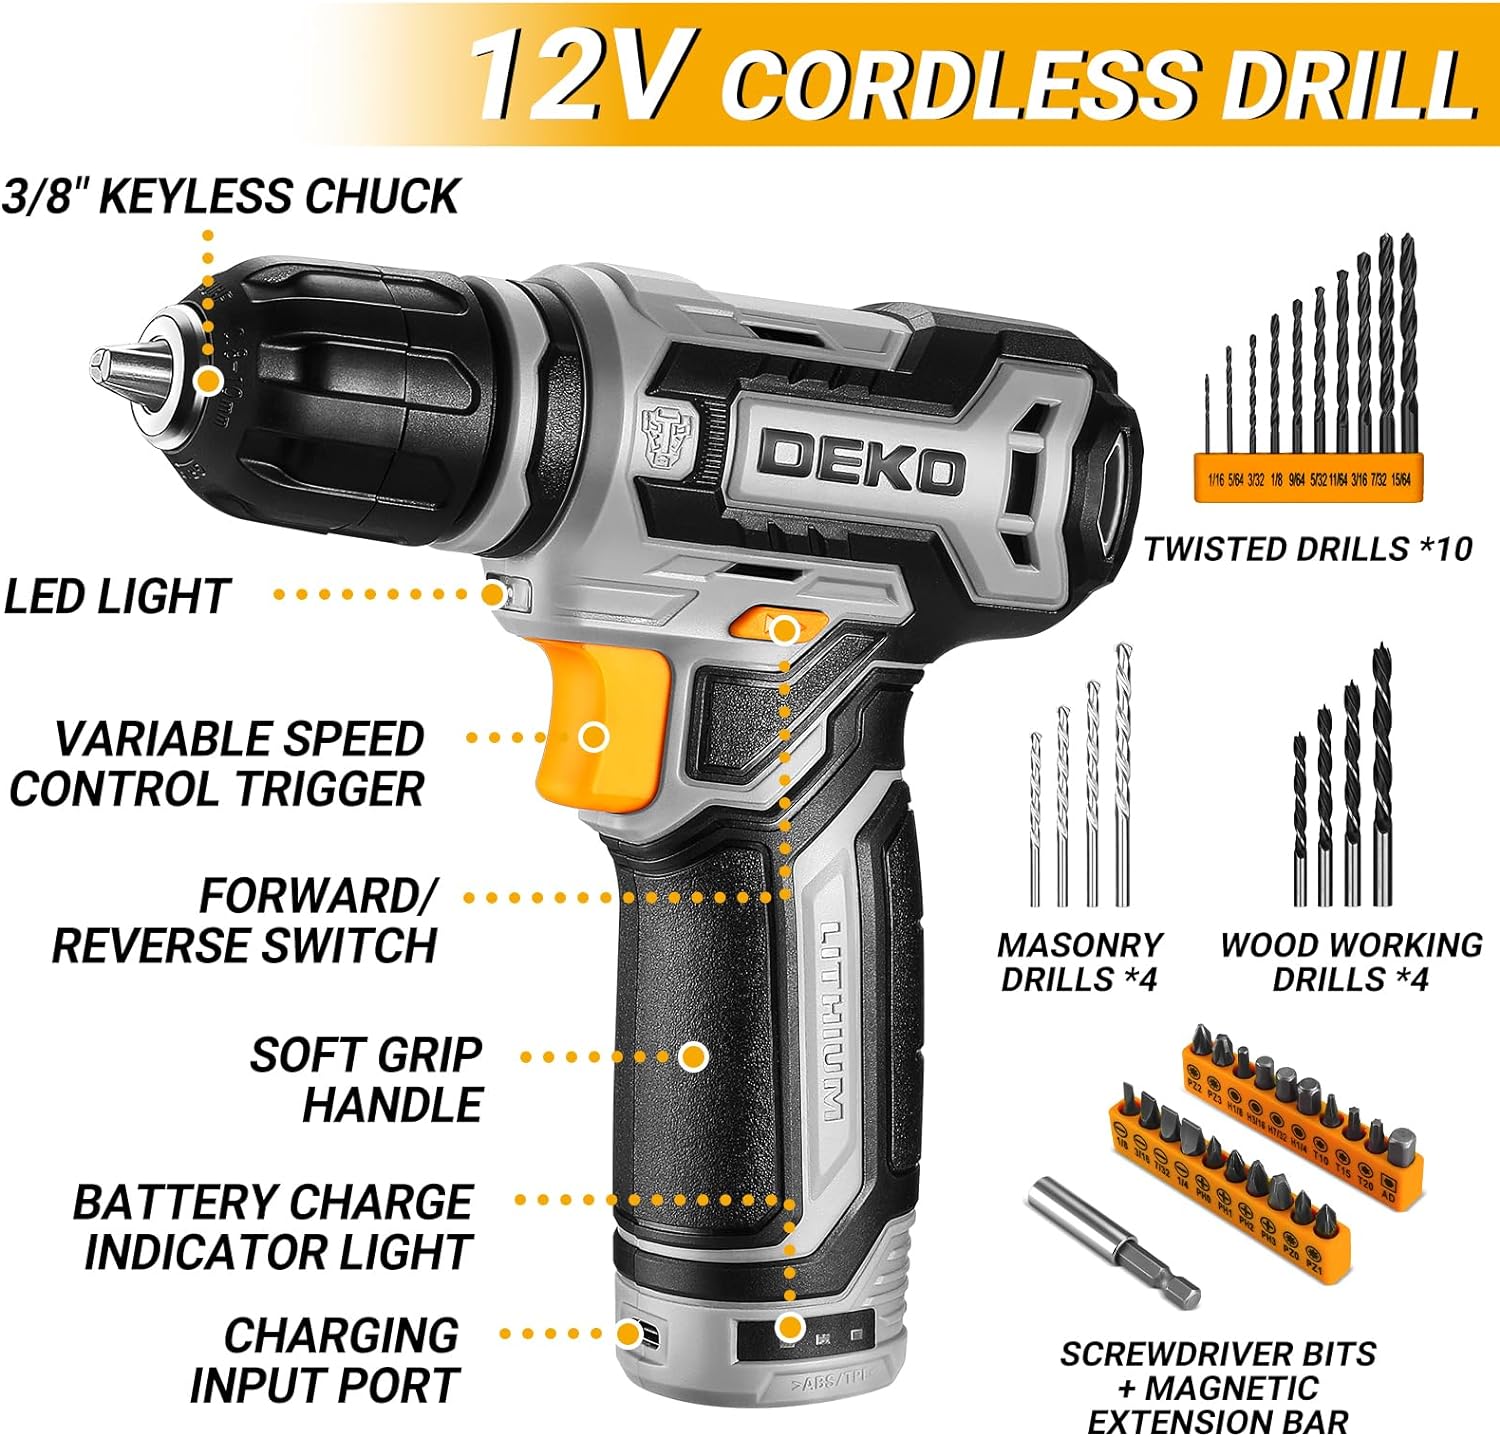 Dekopro Drill Set: Tool Set With 8V Pink Cordless Drill, Home Tool Kit With Drill, Hand Tool Kits For Women 126 Piece